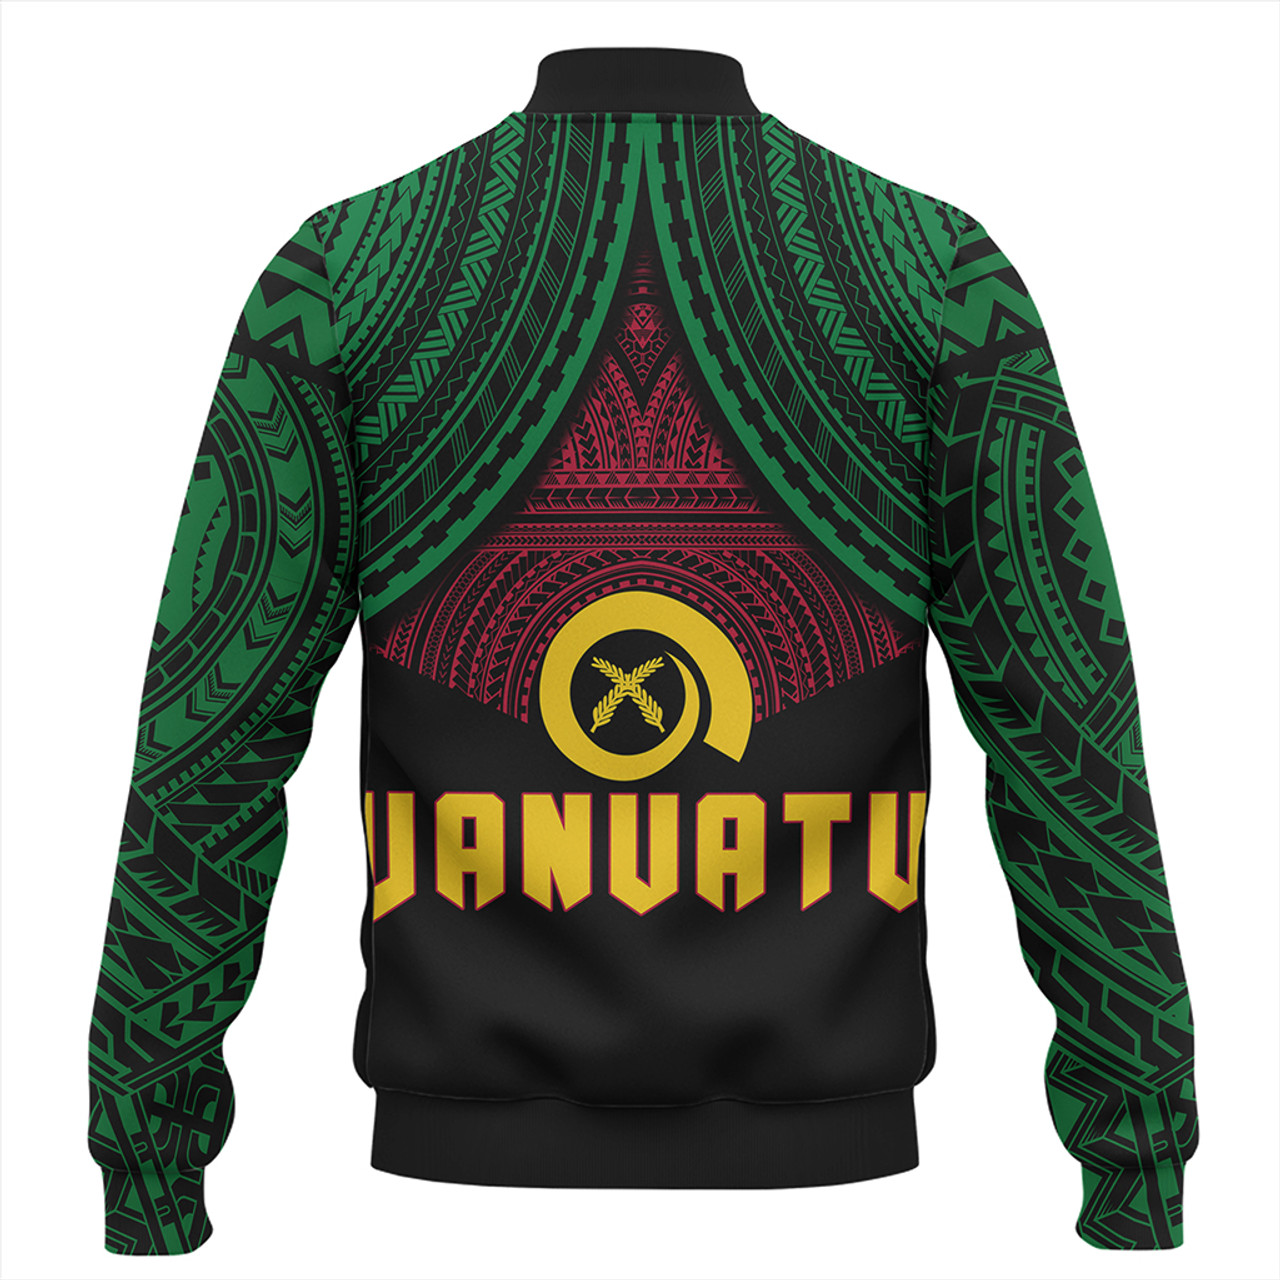 Vanuatu Baseball Jacket Coat Of Arms Tribal